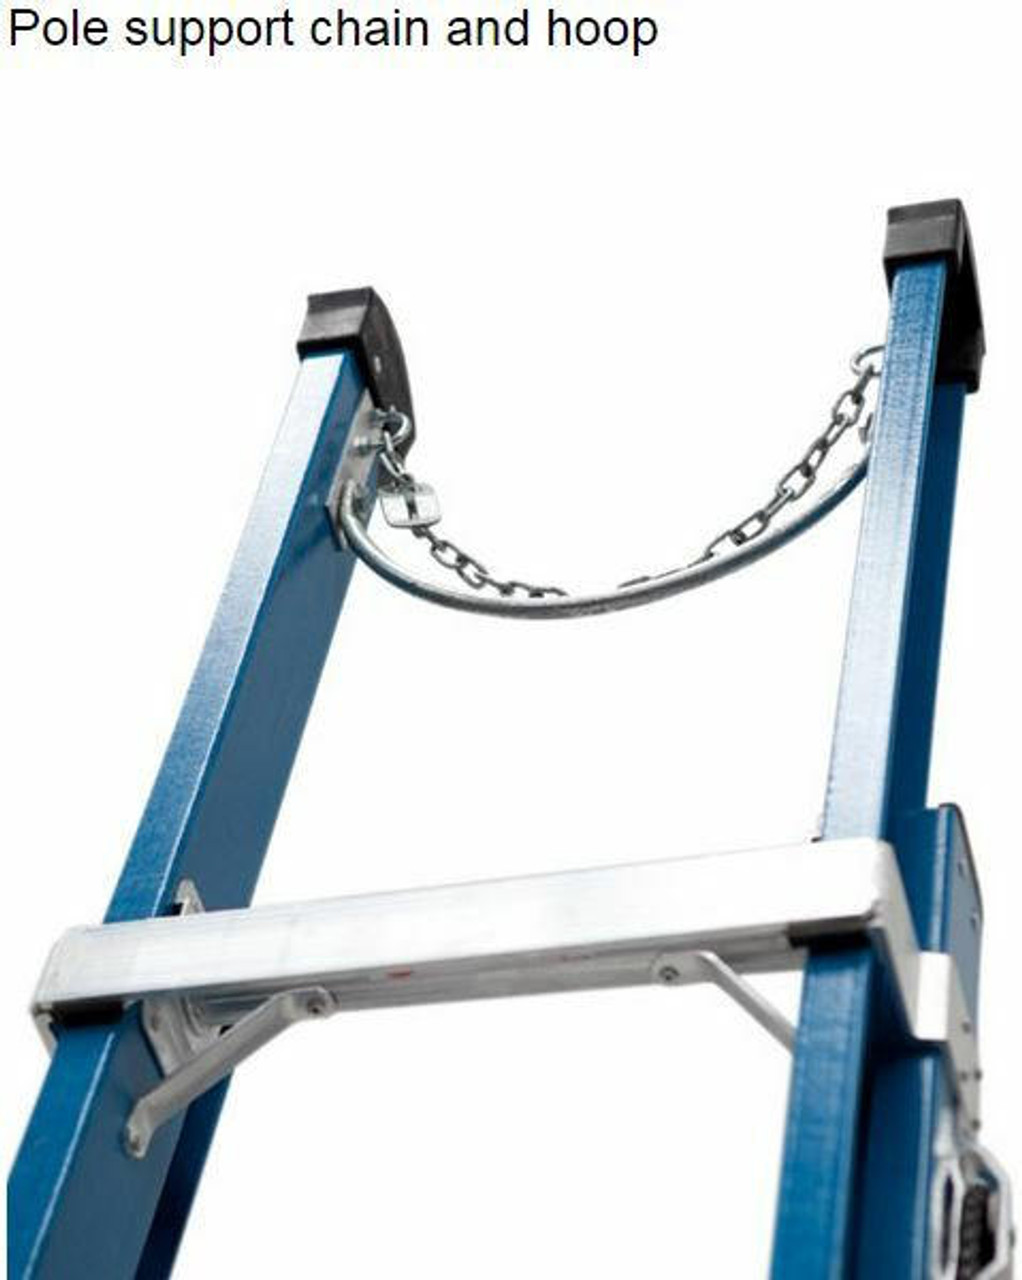 Bailey Extension Ladder Fibreglass 140kg 5.1-8.7m Industrial FXN16/29 FS20190